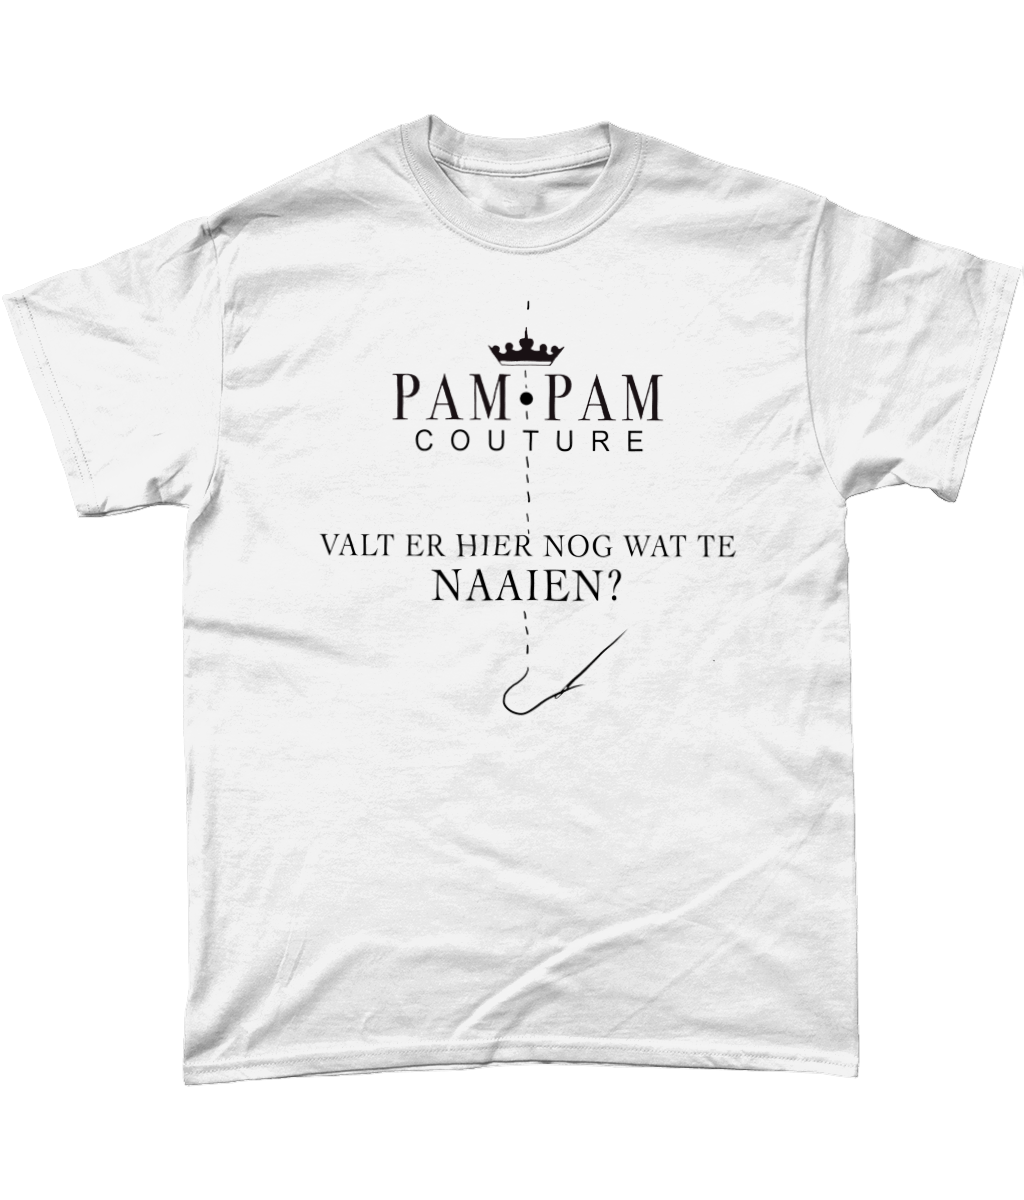 Patty Pam-Pam - Couture T-Shirt